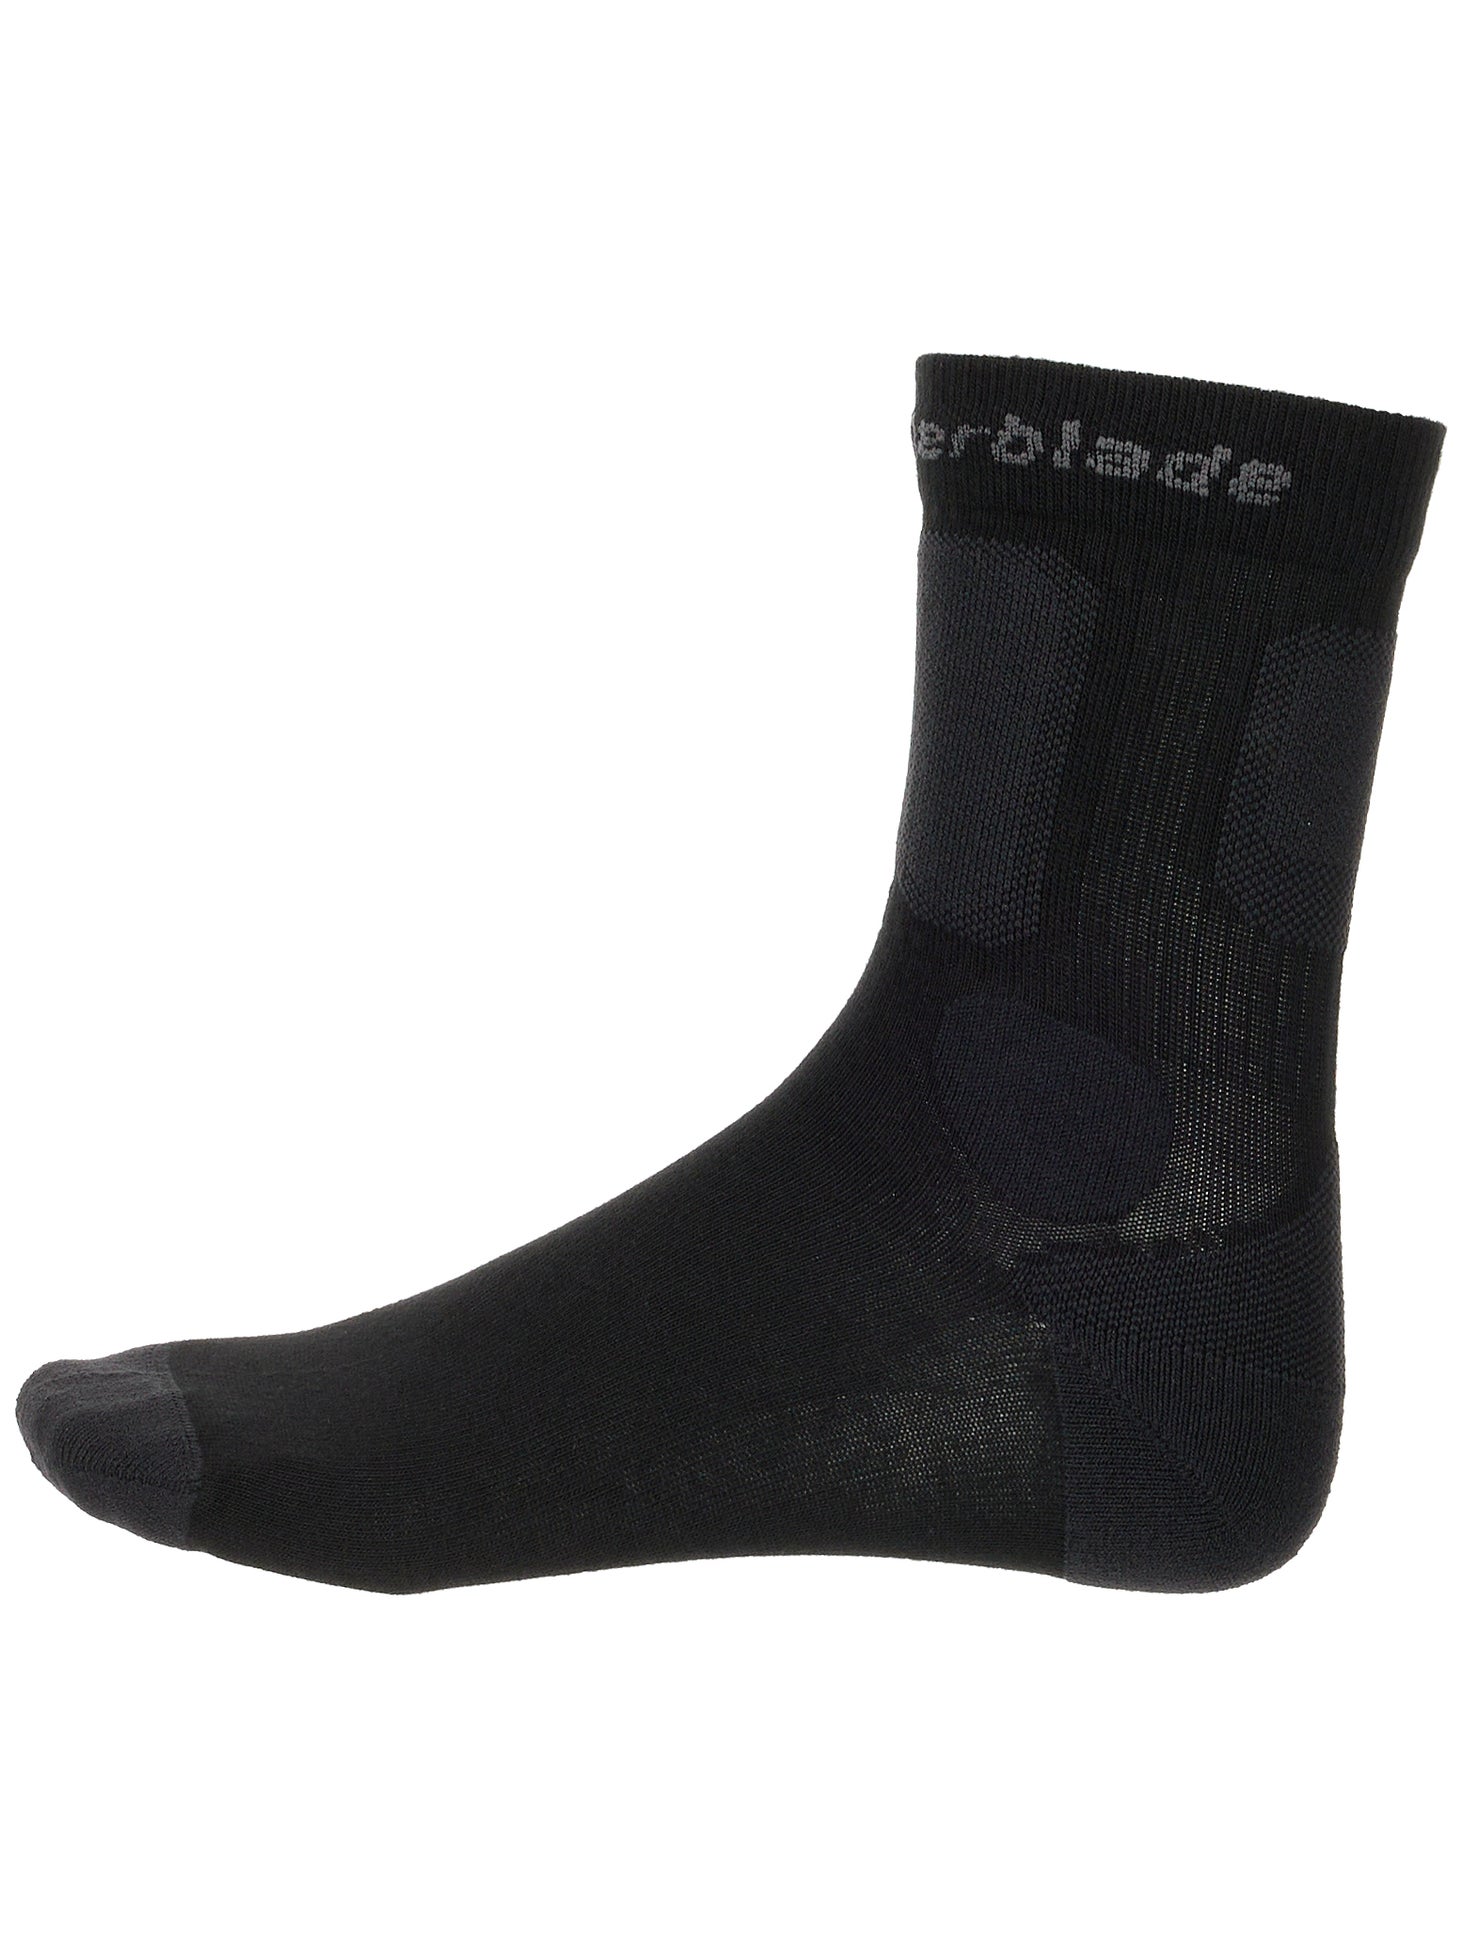 Rollerblade Skate Socks Unisex 3pk - Inline Warehouse